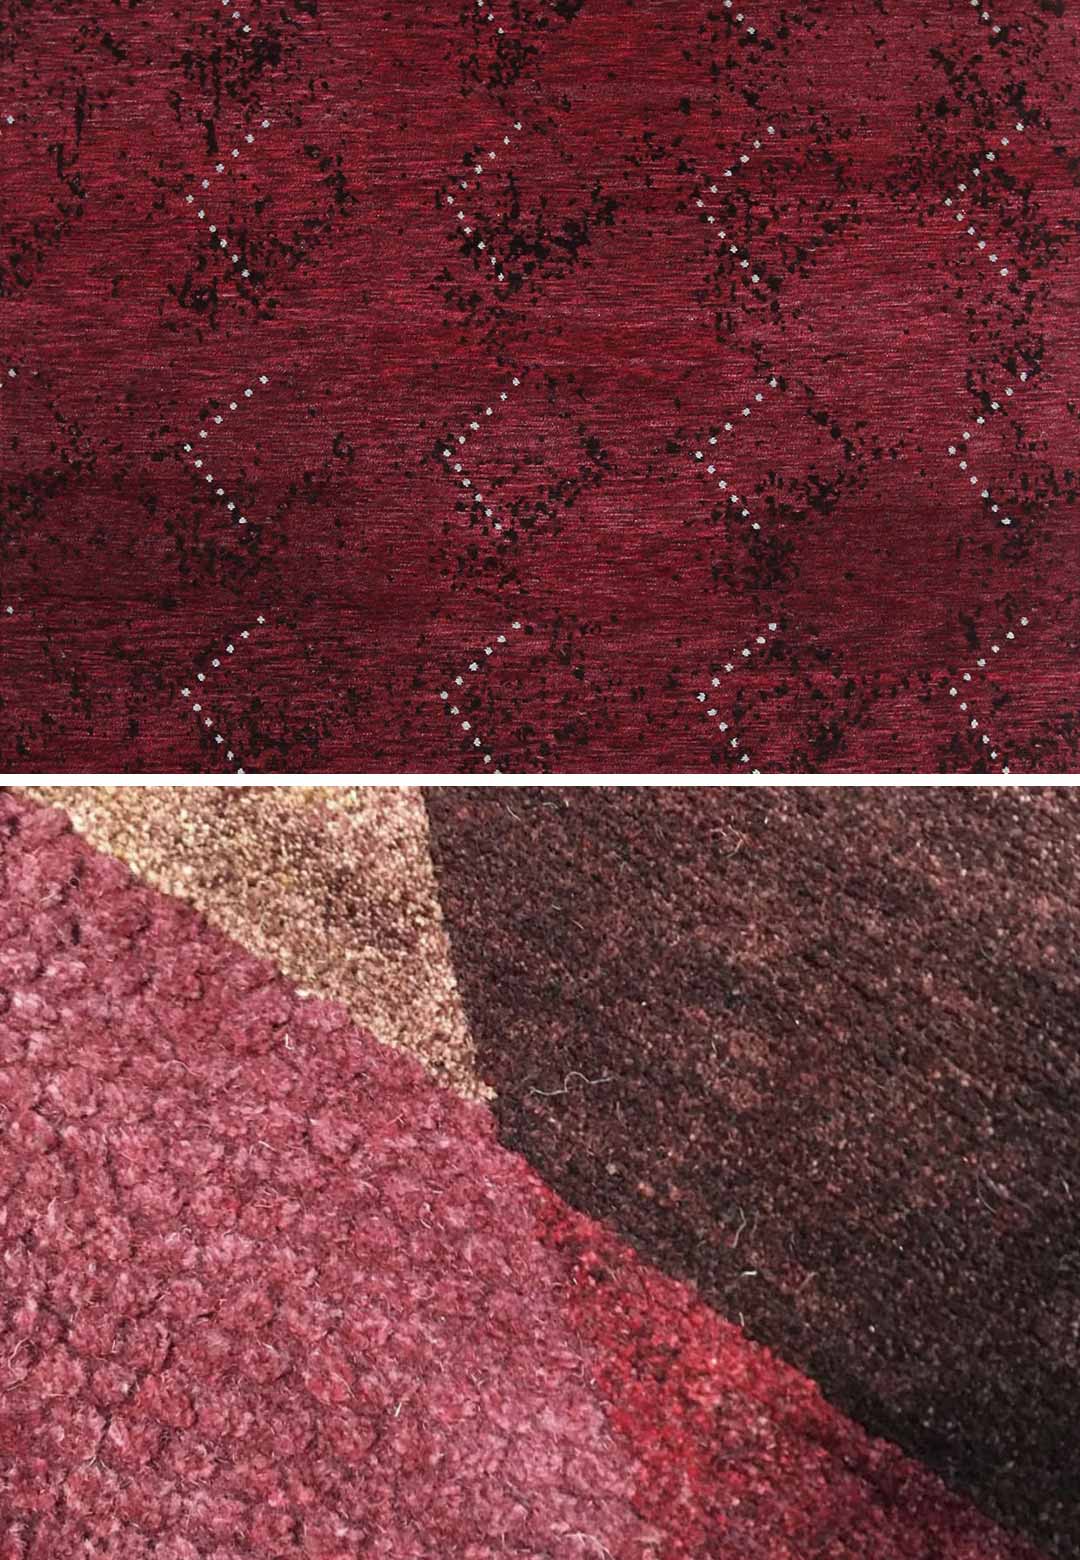 Pantone Color of the Year, Viva Magenta inspires Battilossi’s carpet curation